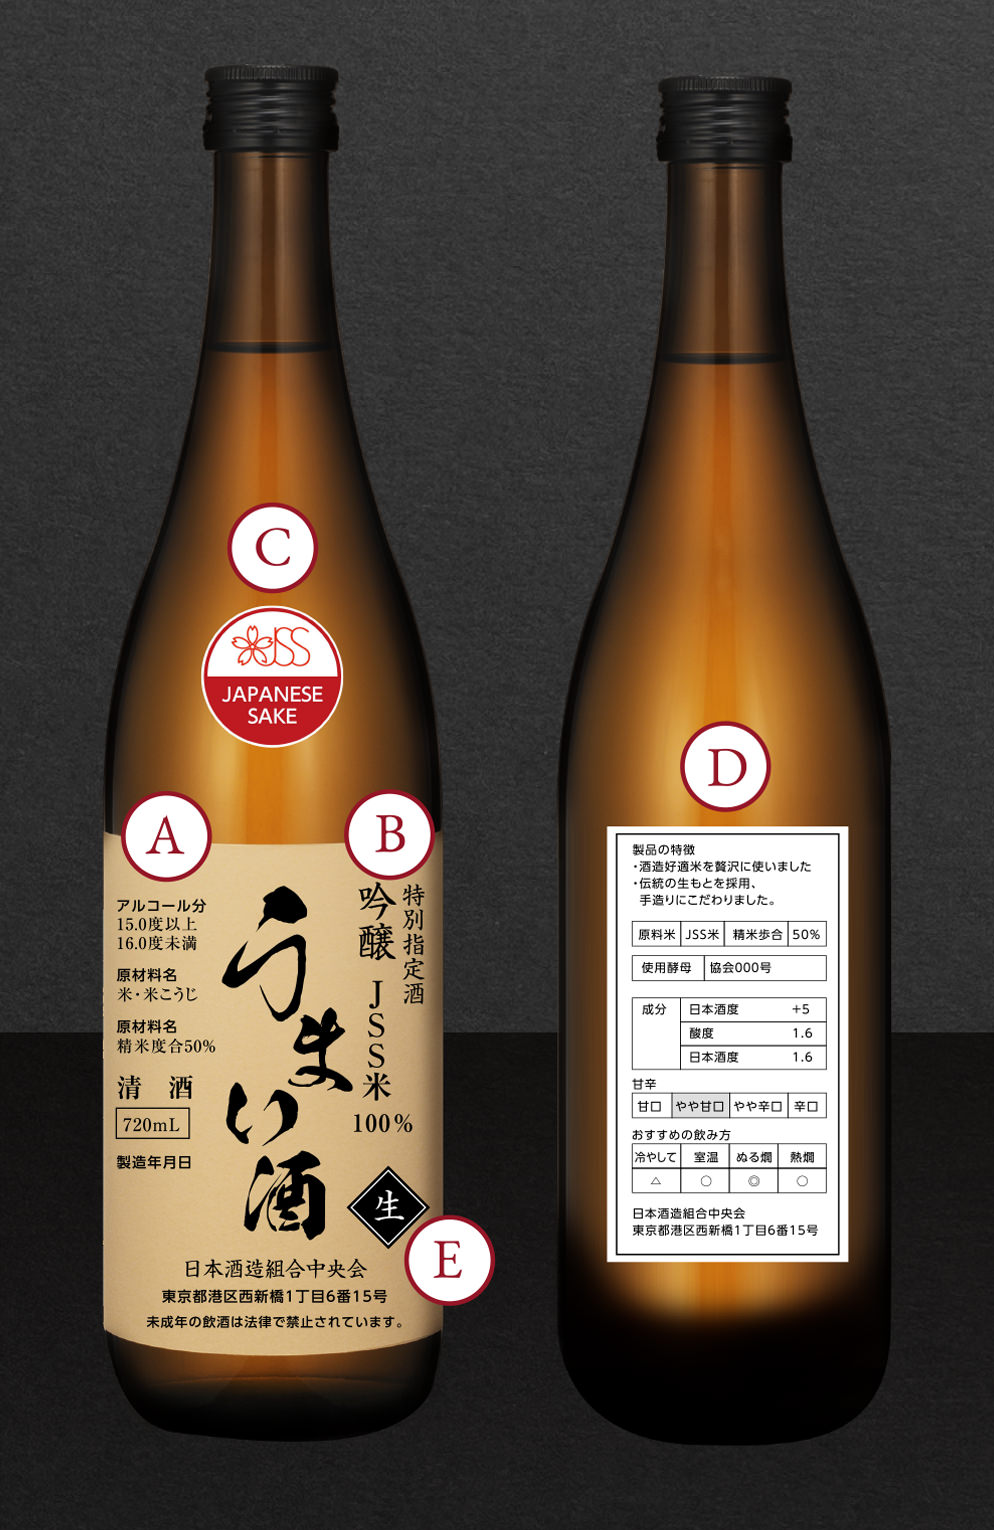 Japanese sake, one of the brewed beverages